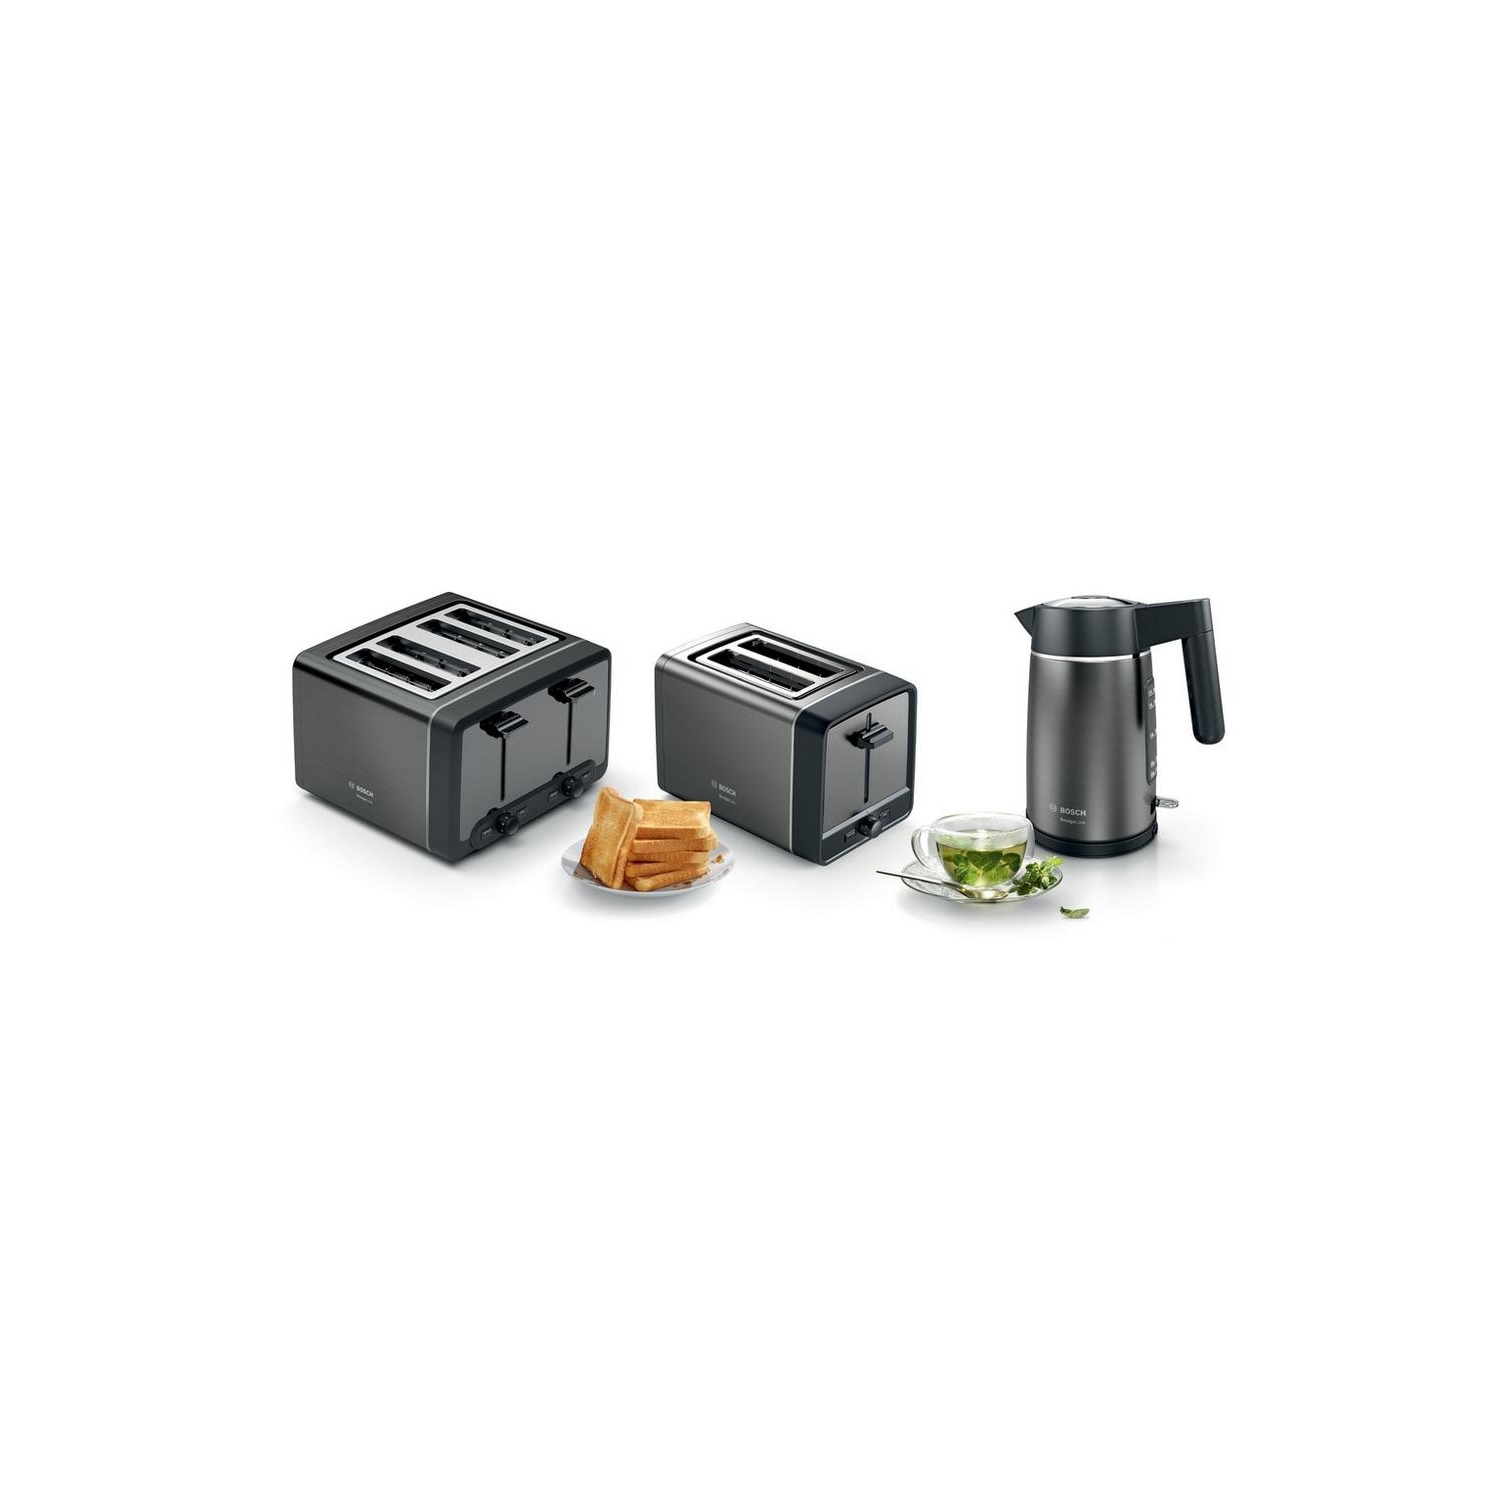 Bosch TAT5P445GB 4 Slice Toaster - Anthracite - 2